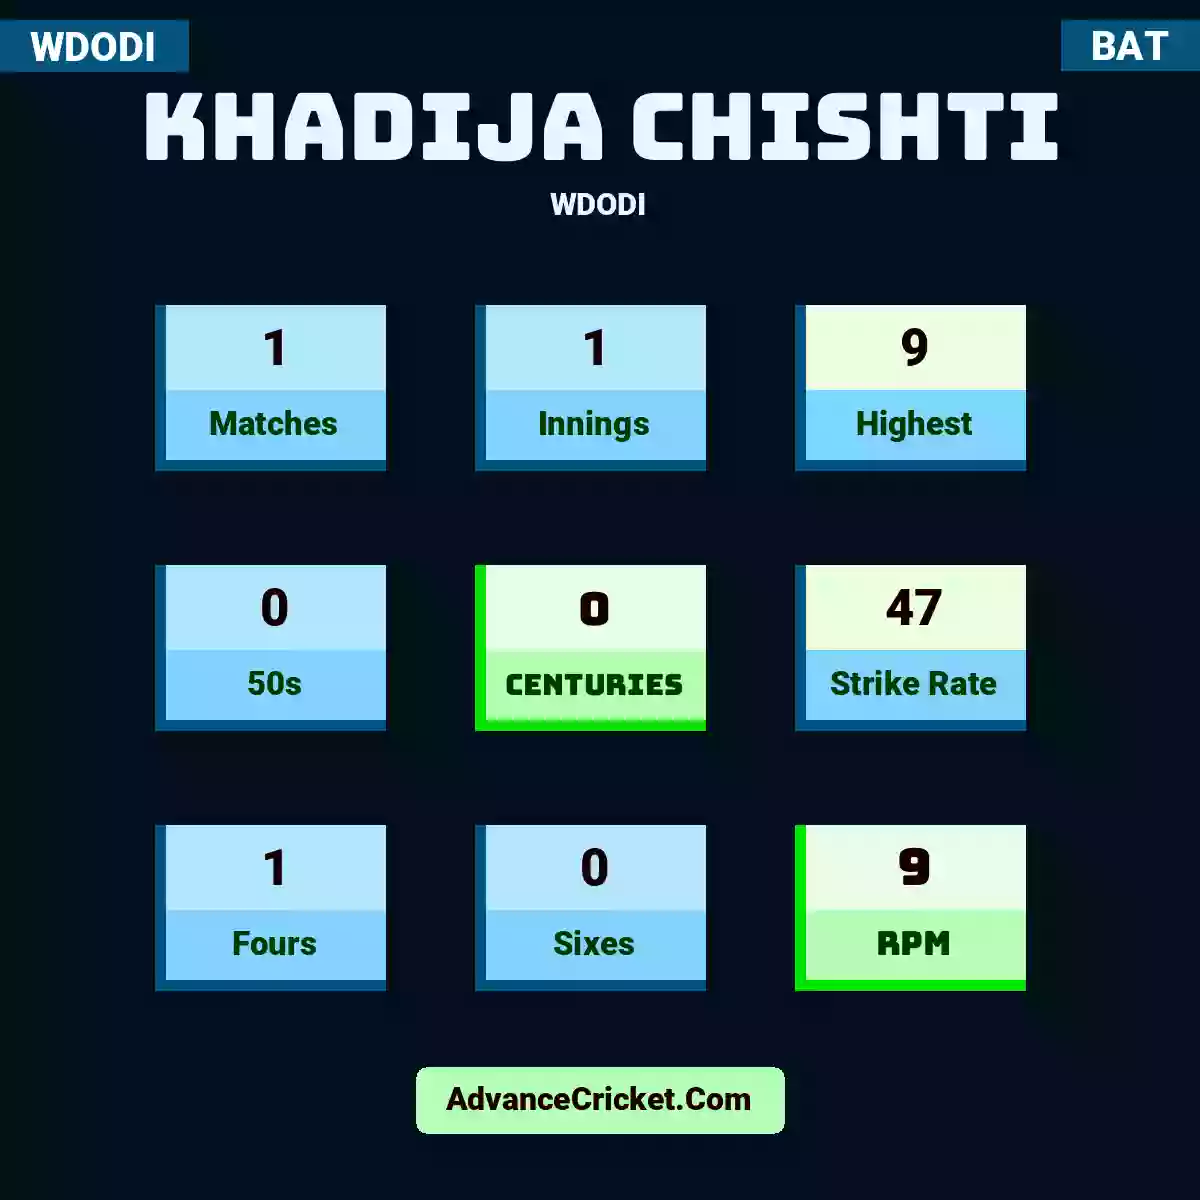 Khadija Chishti WDODI , Khadija Chishti played 1 matches, scored 9 runs as highest, 0 half-centuries, and 0 centuries, with a strike rate of 47. K.Chishti hit 1 fours and 0 sixes, with an RPM of 9.